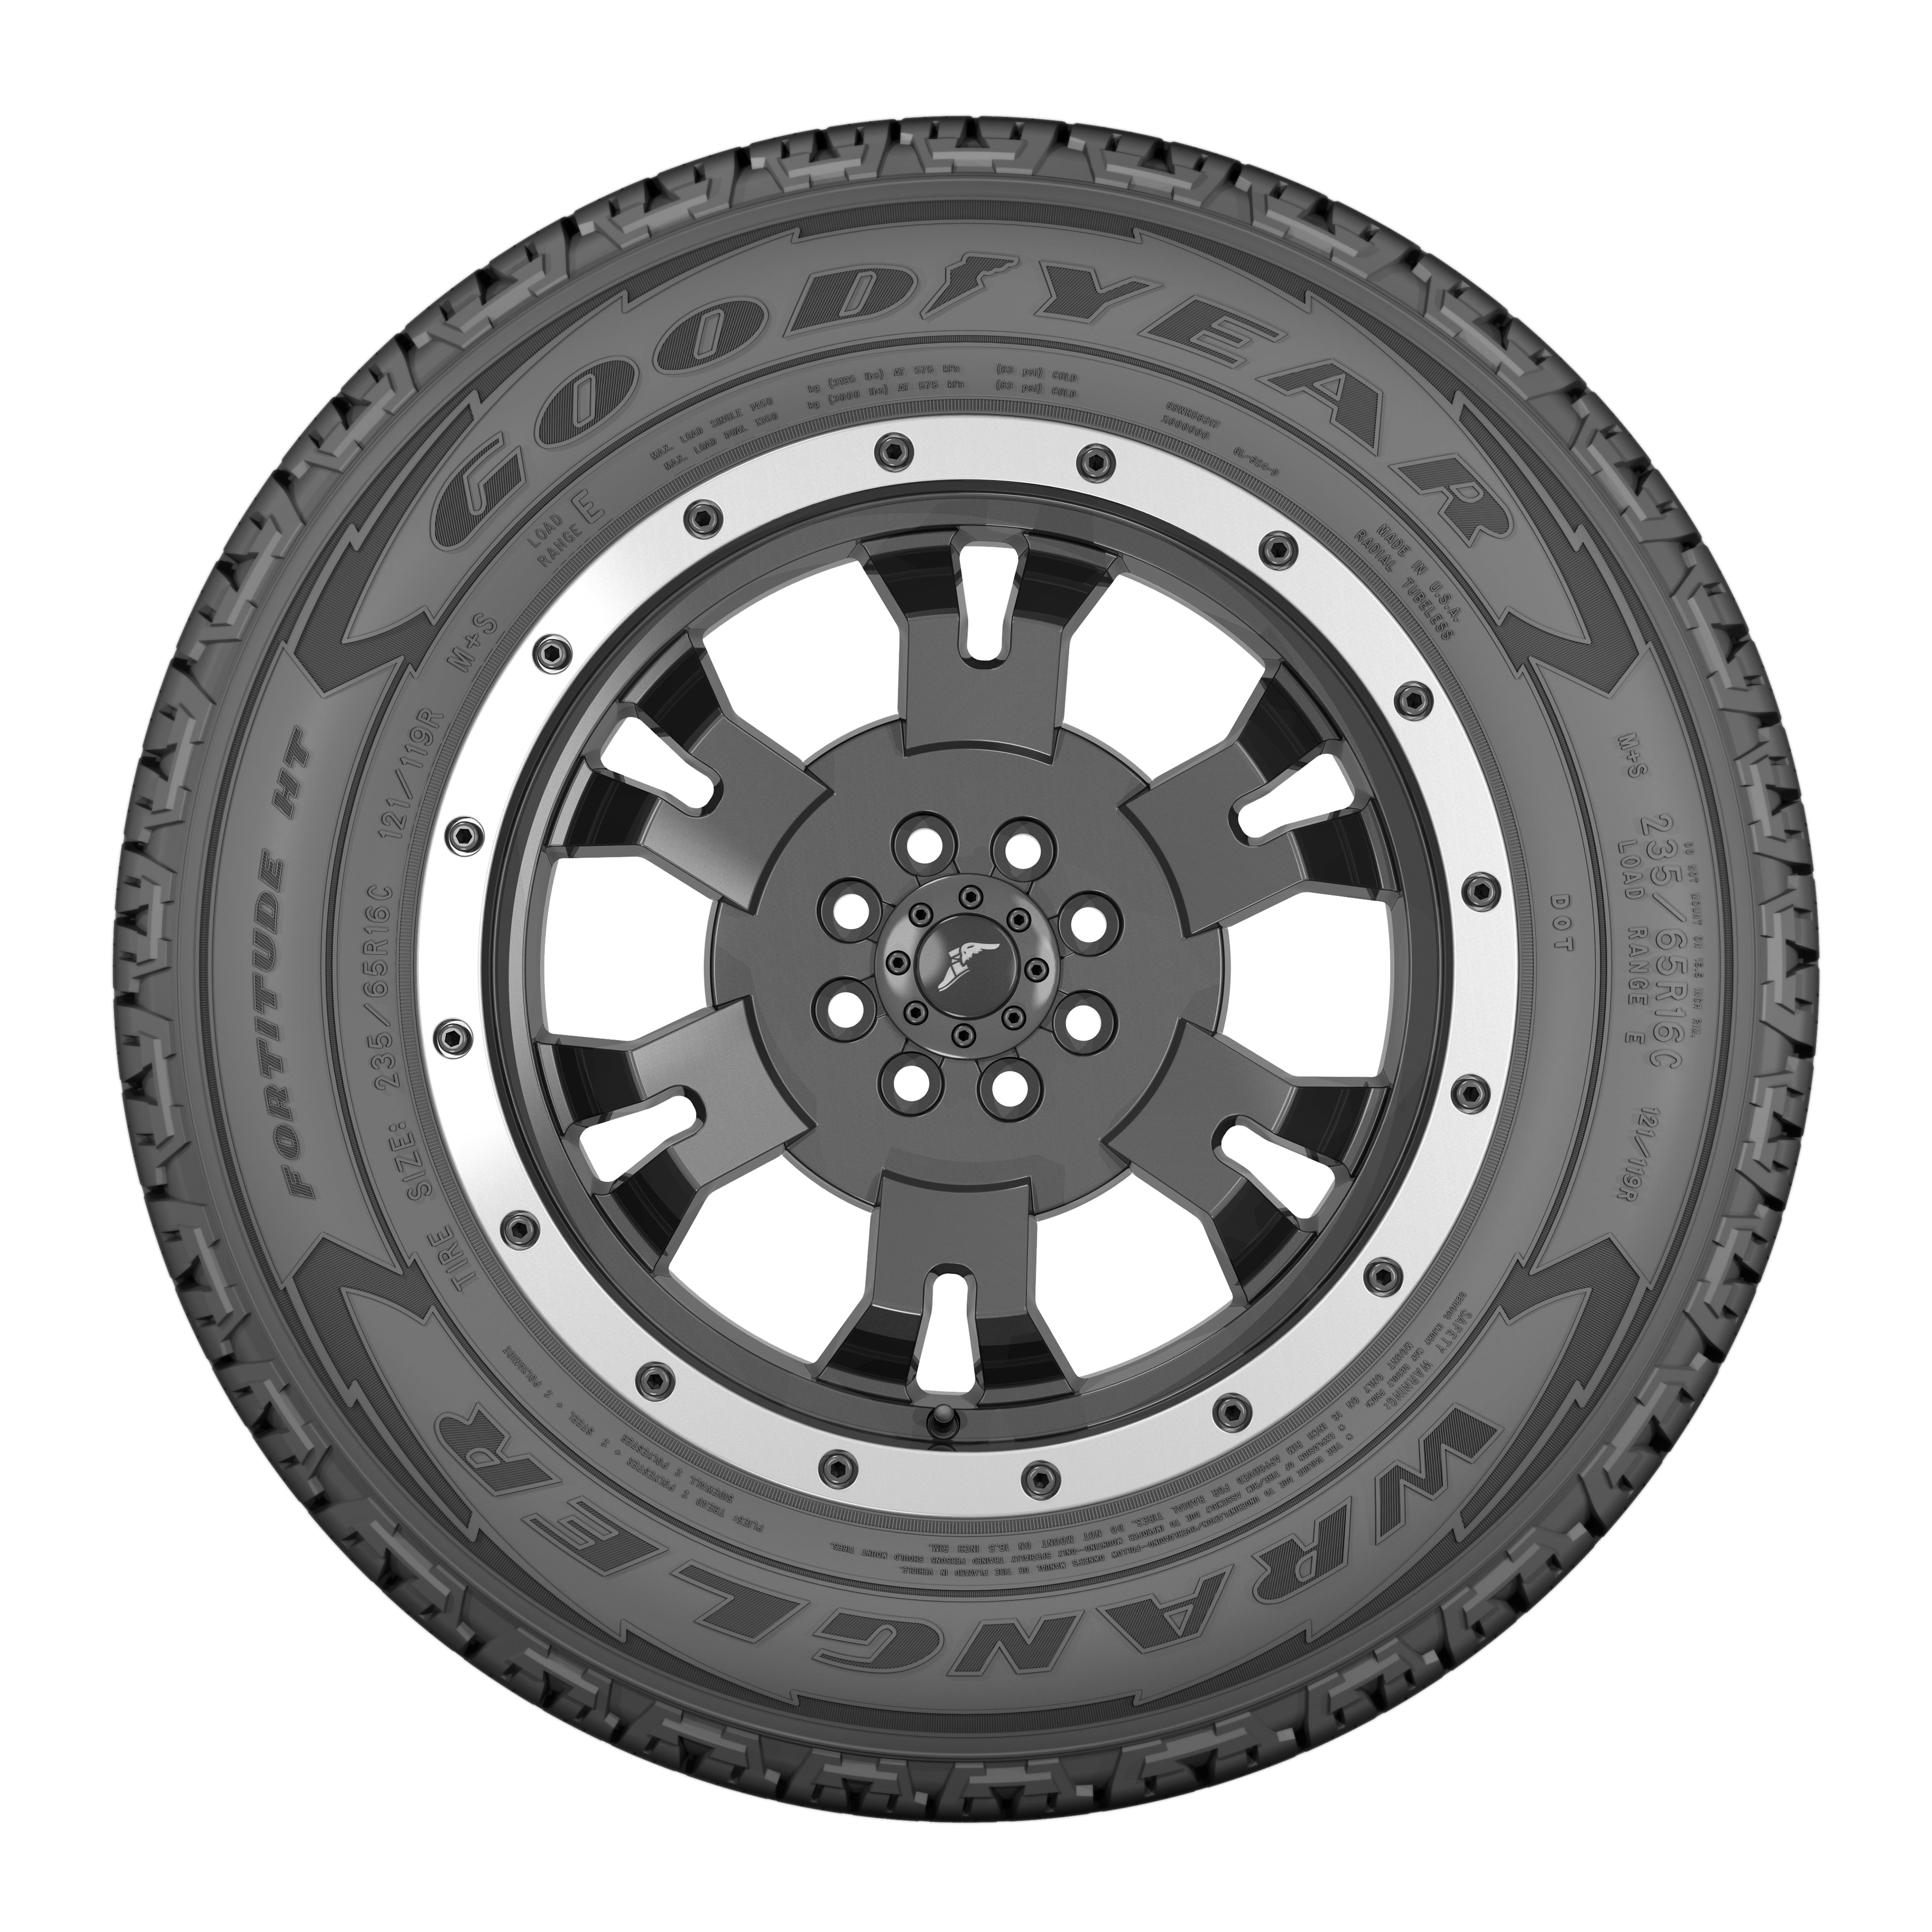 Goodyear Wrangler Fortitude HT 255/65R17 110T A/S All Season Tire -  